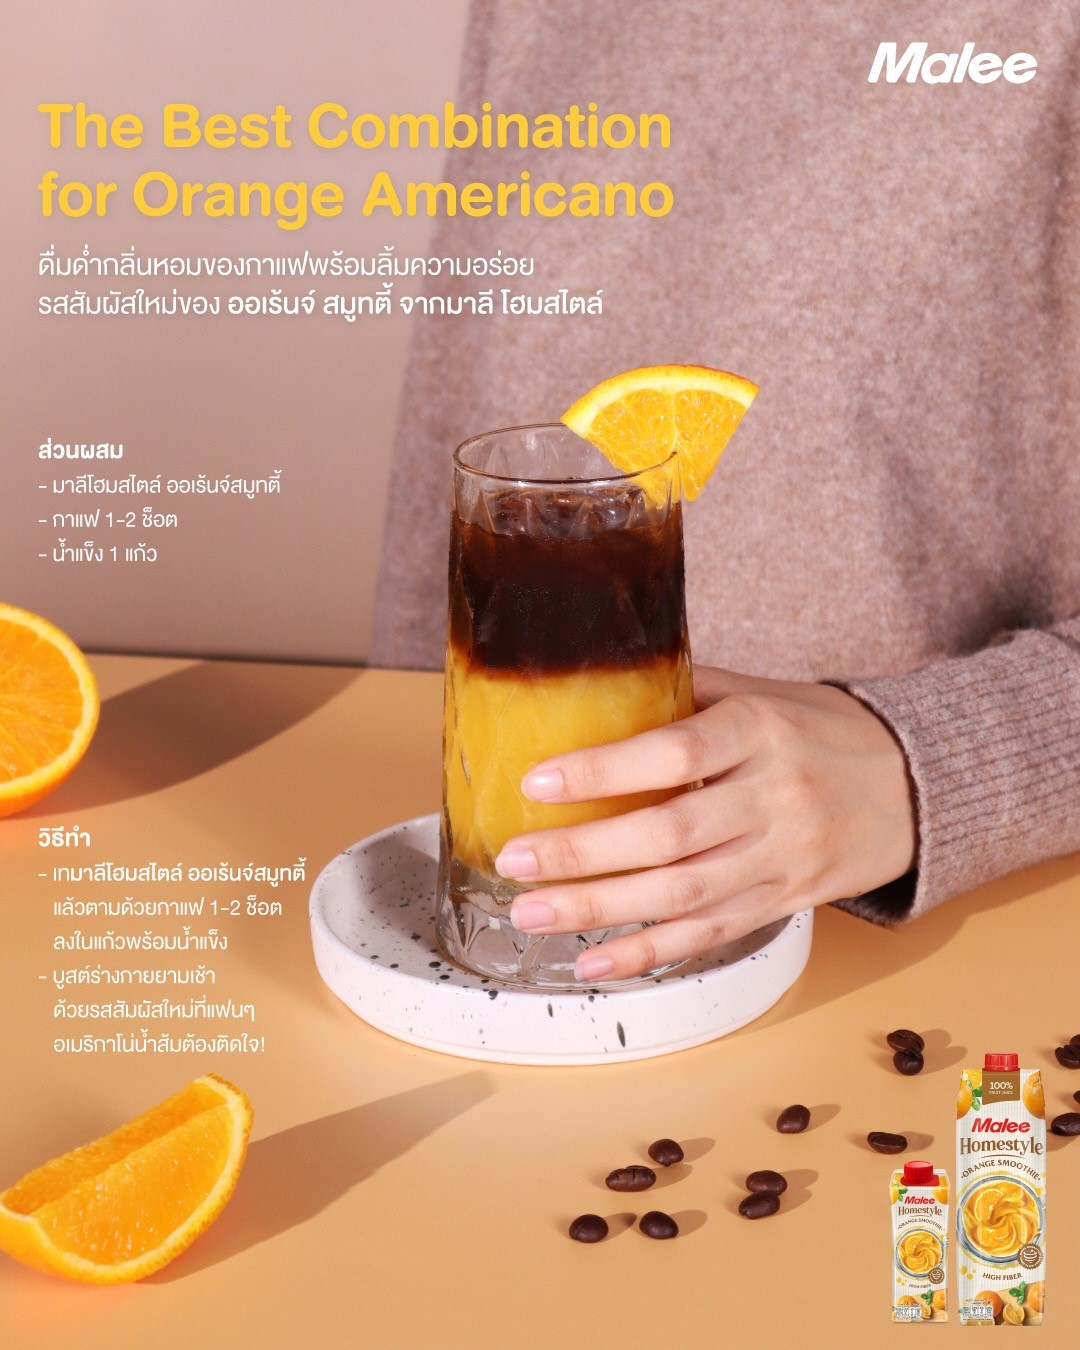 The Best Combination for Orange Americano